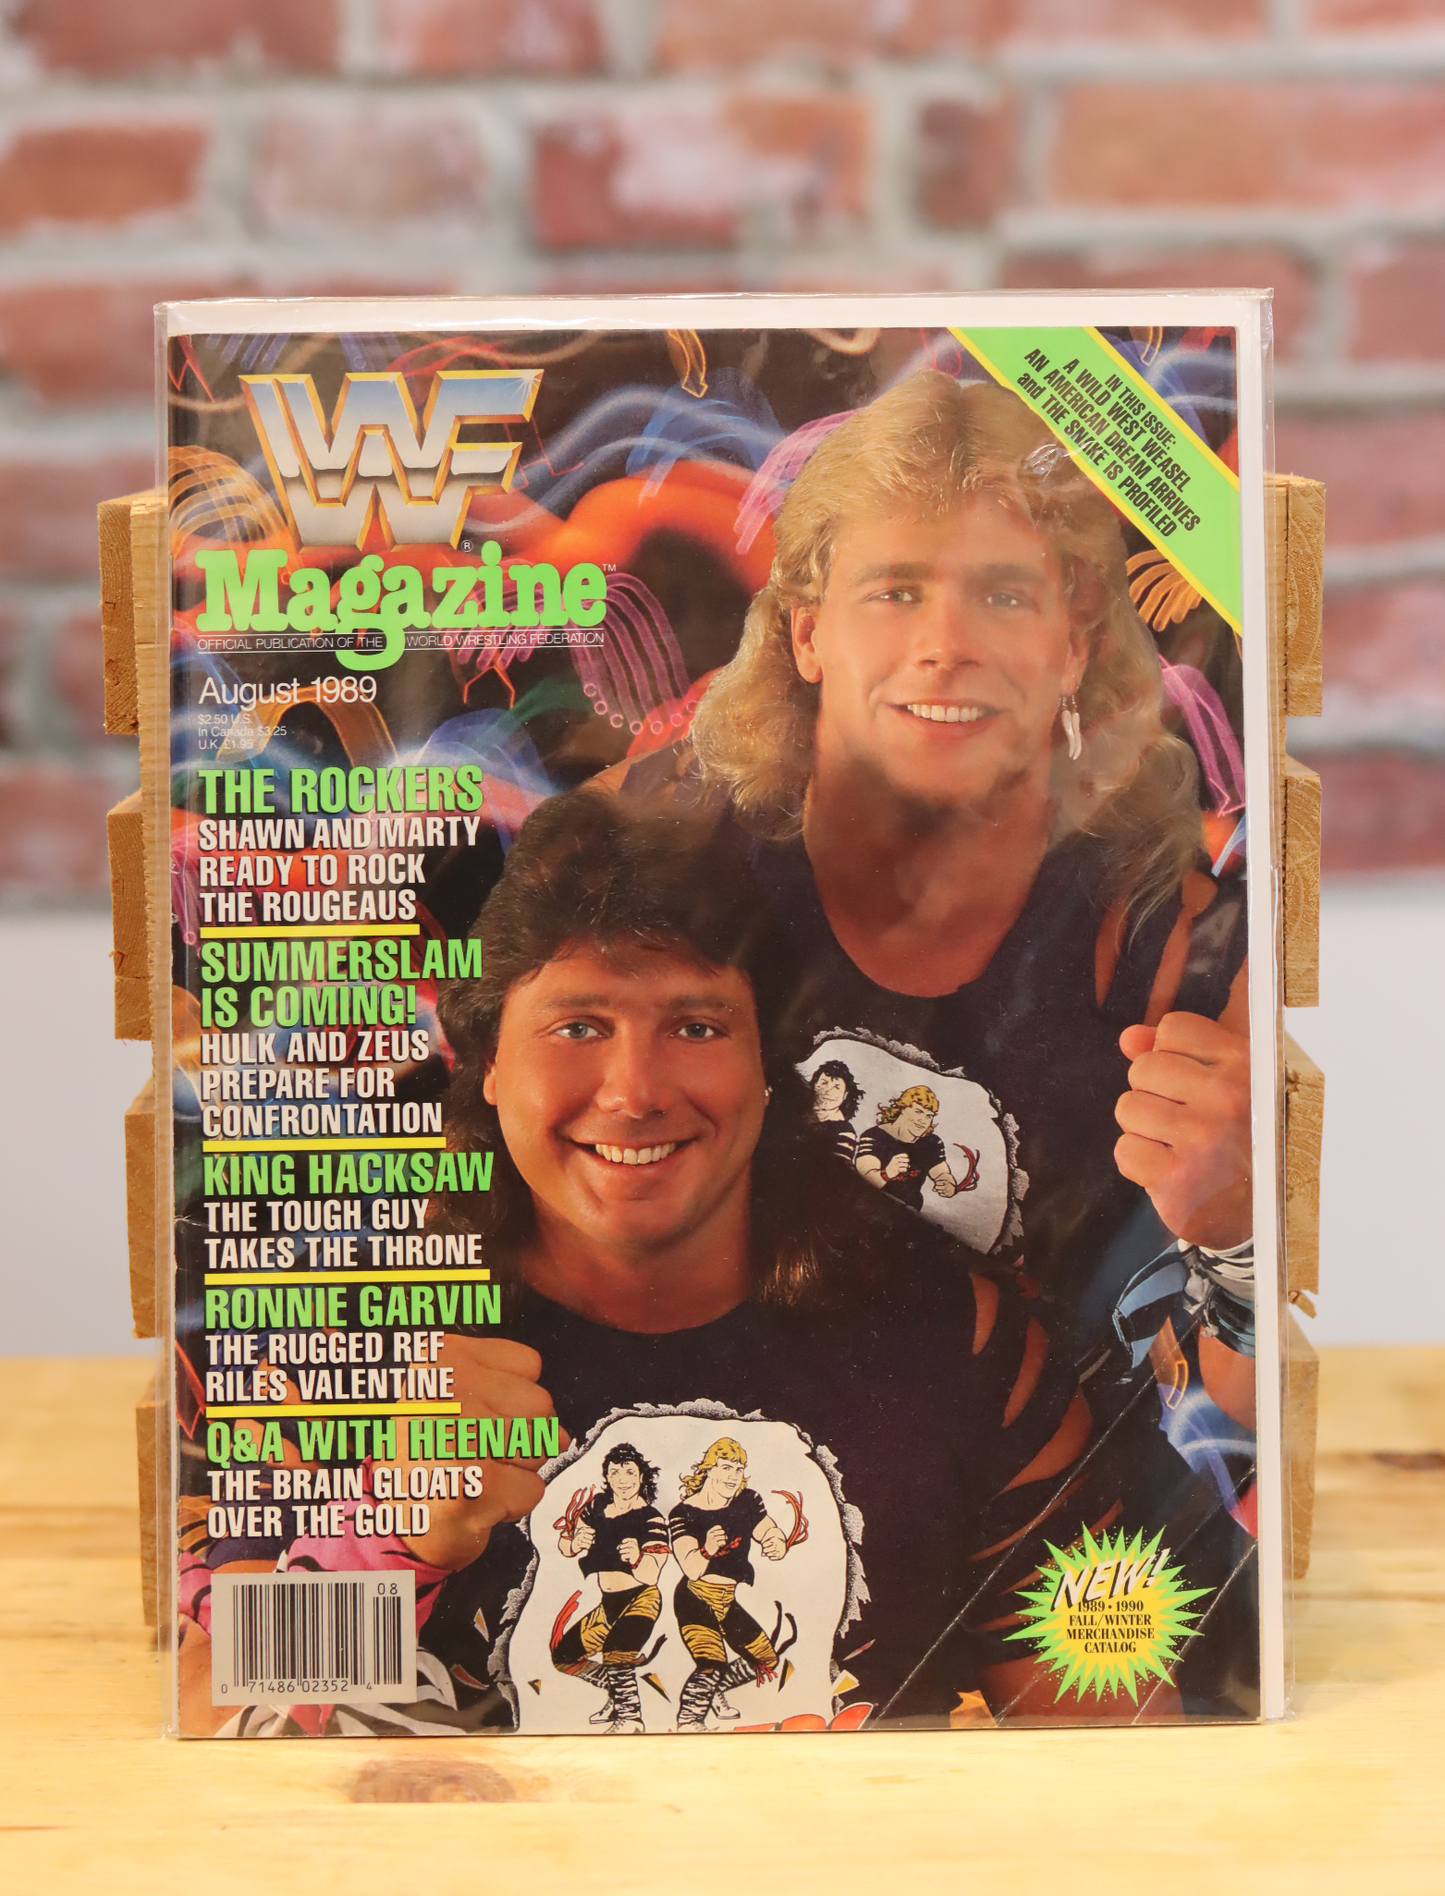 Original WWF WWE Vintage Wrestling Magazine The Rockers (August 1989)